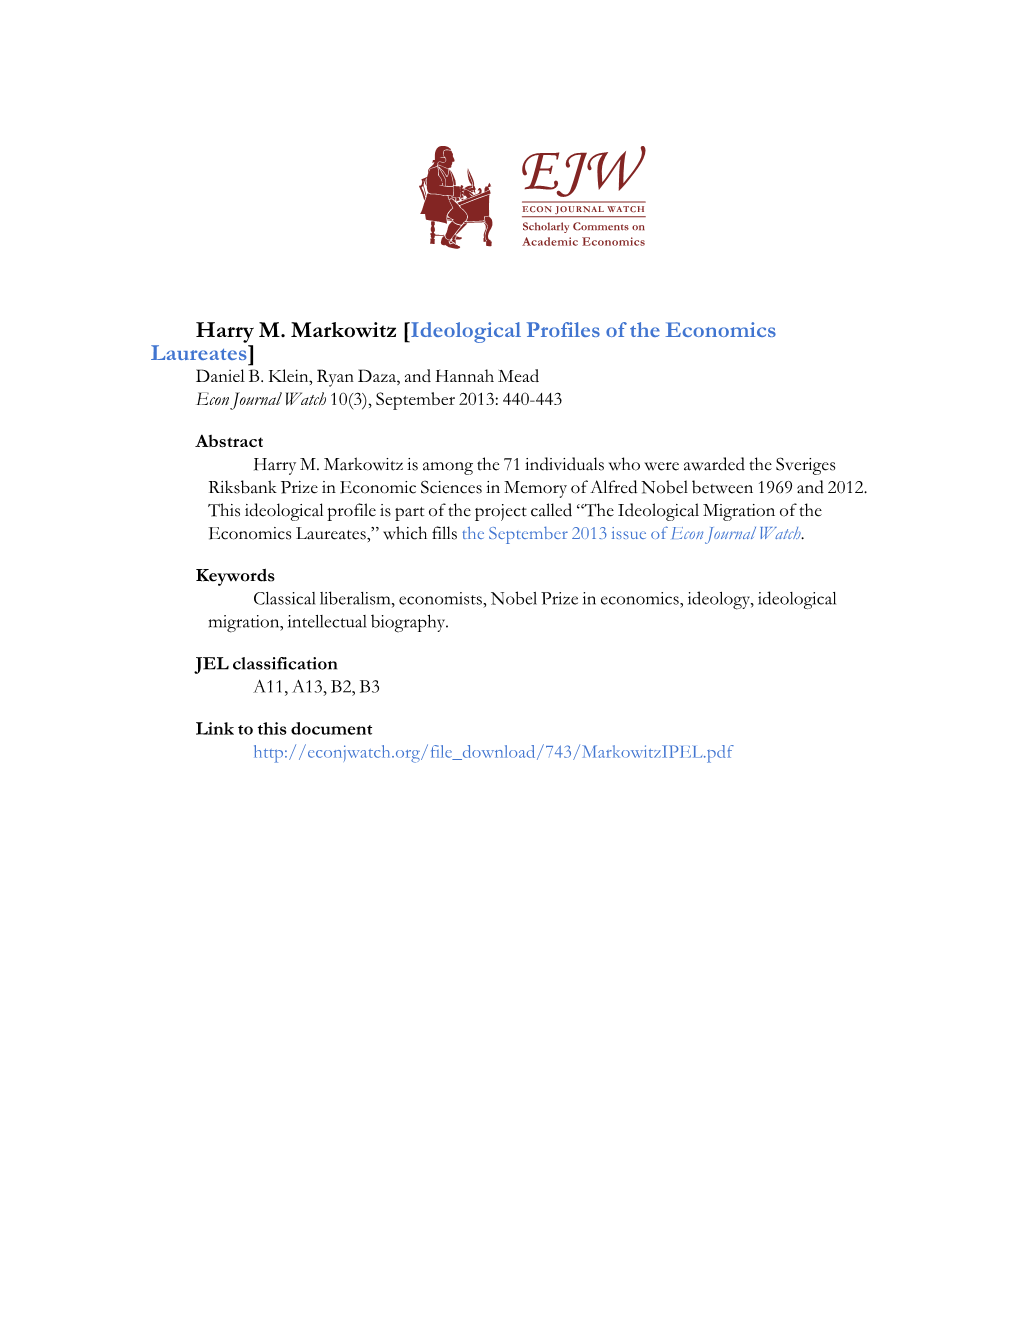 Harry M. Markowitz [Ideological Profiles of the Economics Laureates] Daniel B